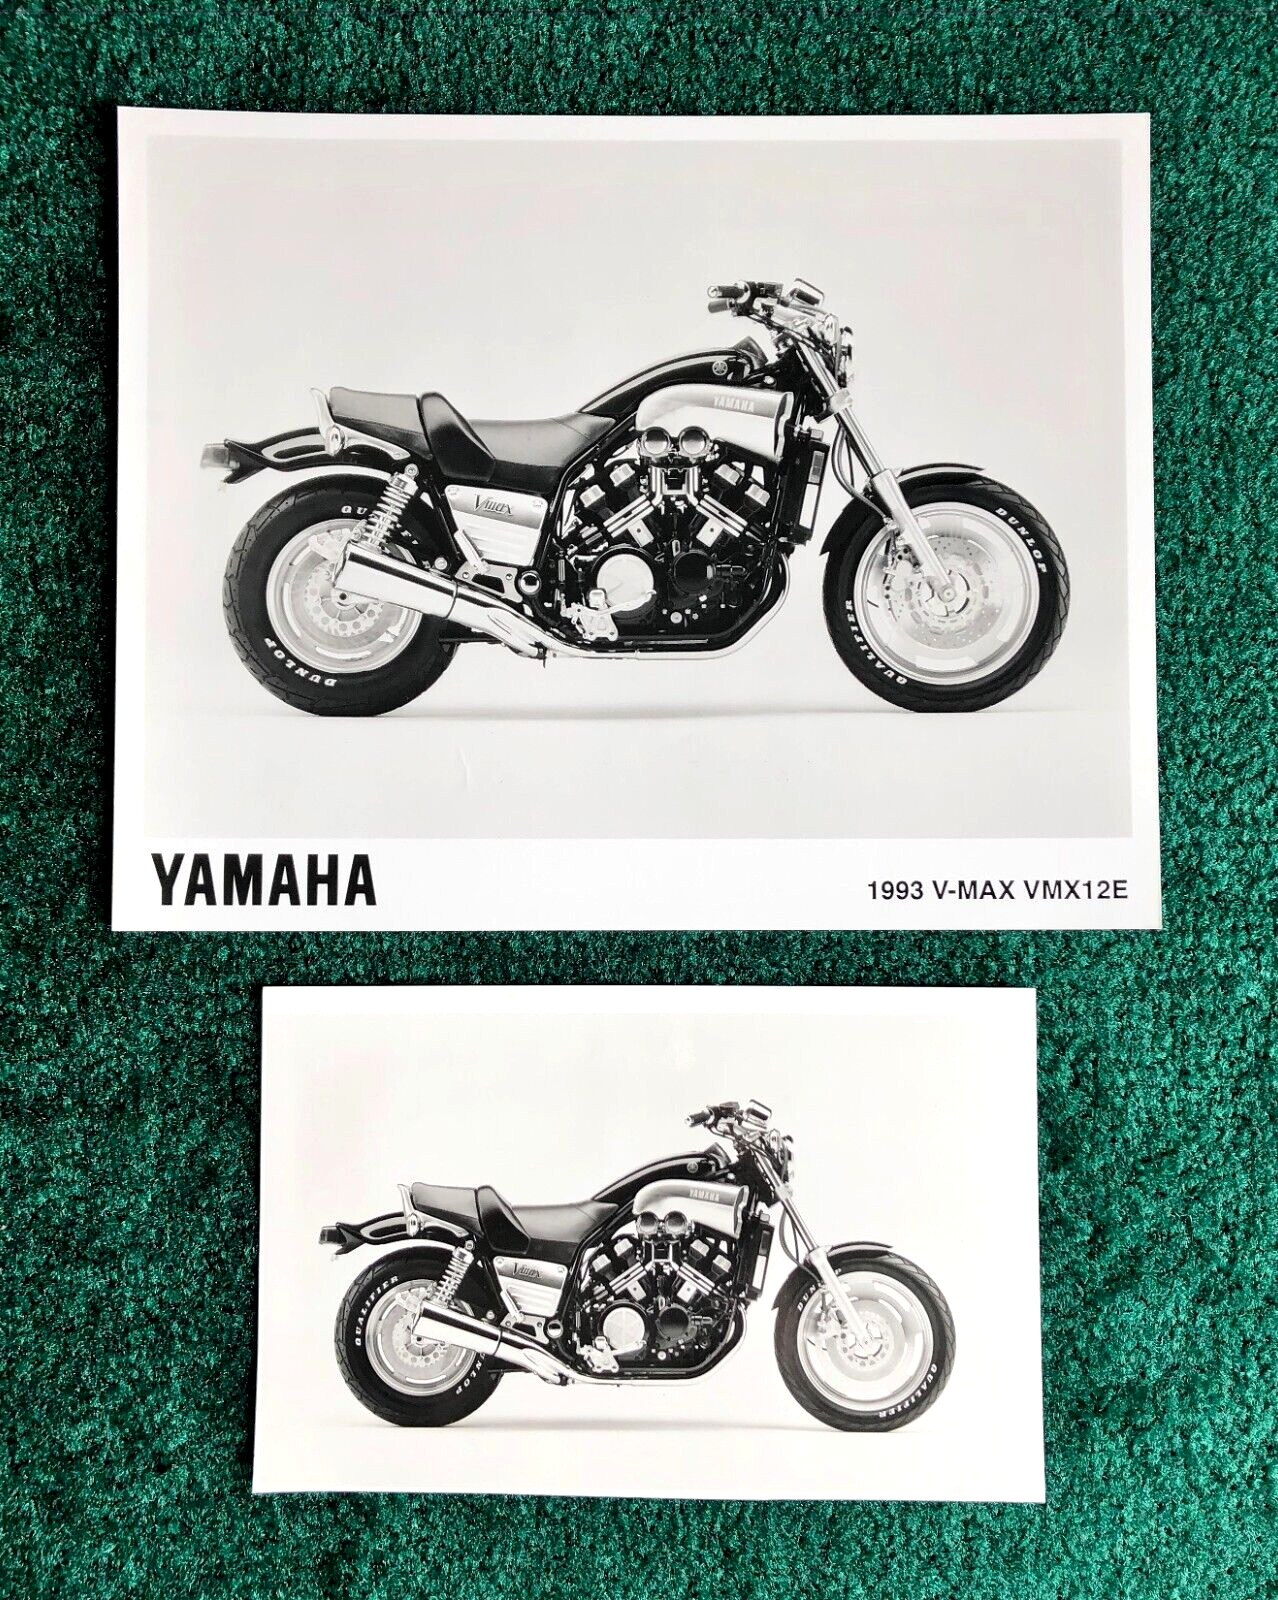 RARE ORIGINAL 1993 YAMAHA MOTORCYCLE FACTORY PRESS PHOTOS V-MAX VMX-12E VMAX